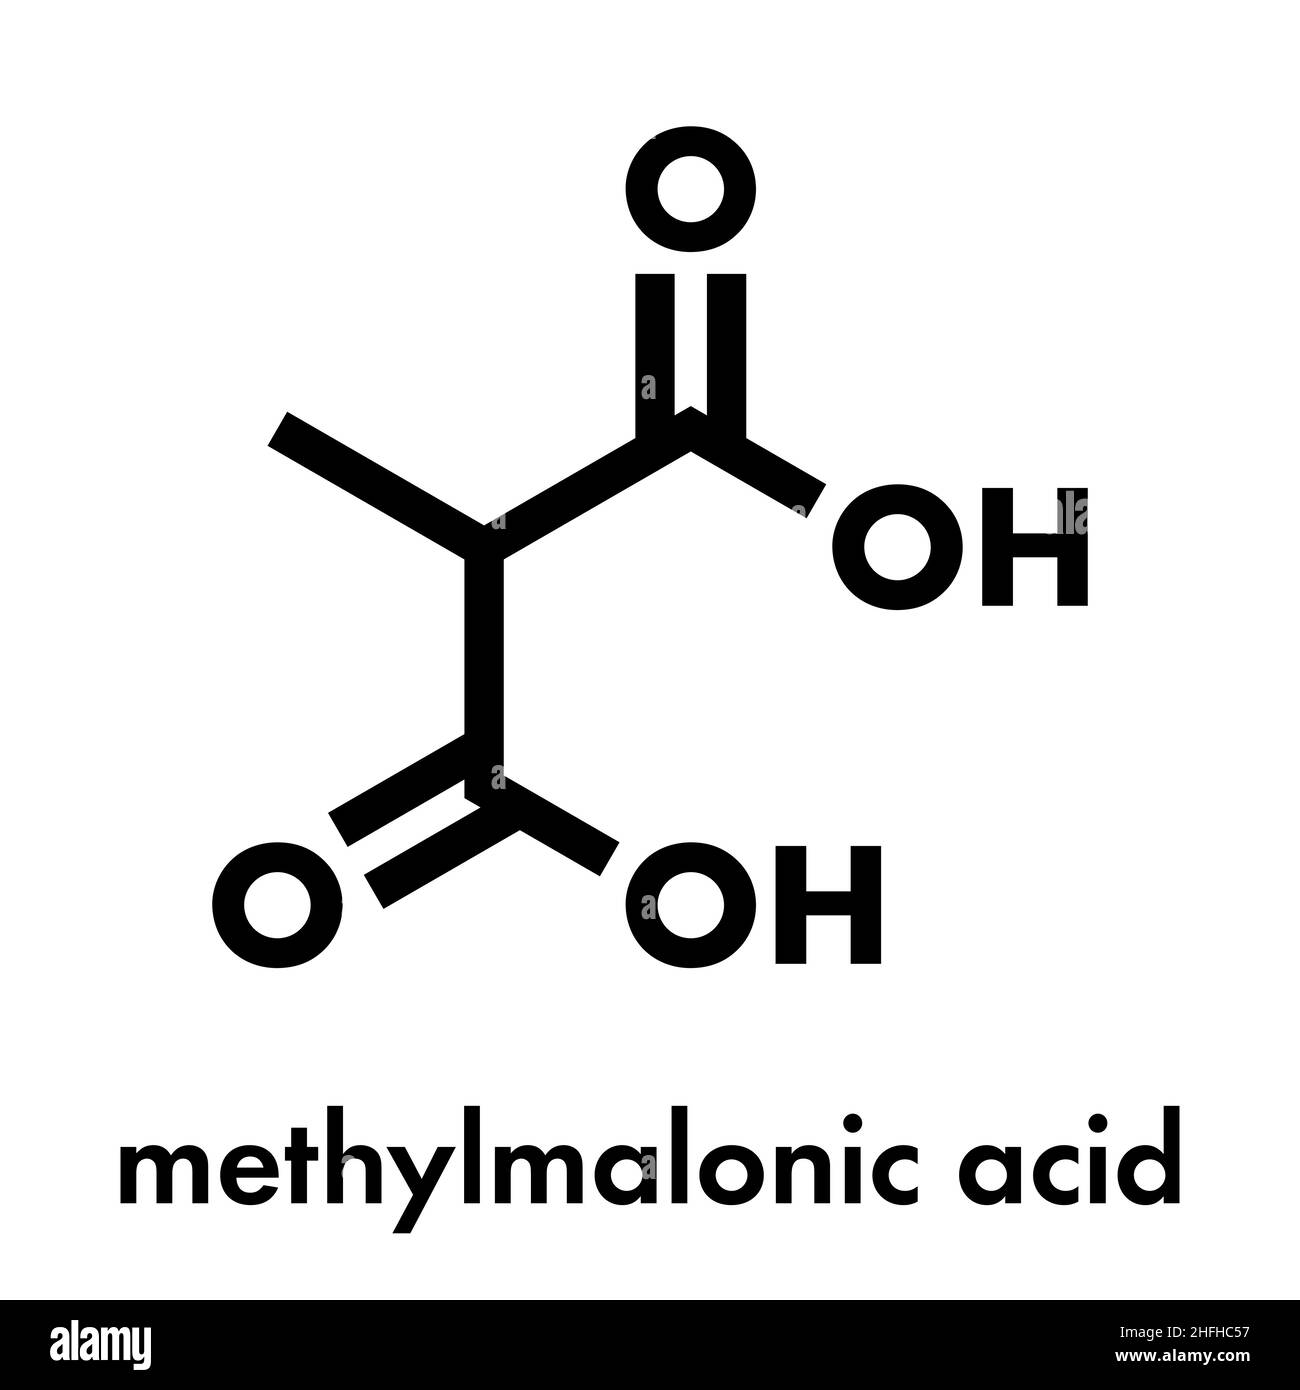 Methylmalonic acid molecule. Increased plasma levels may indicate vitamin B12 deficiency. Skeletal formula. Stock Vector